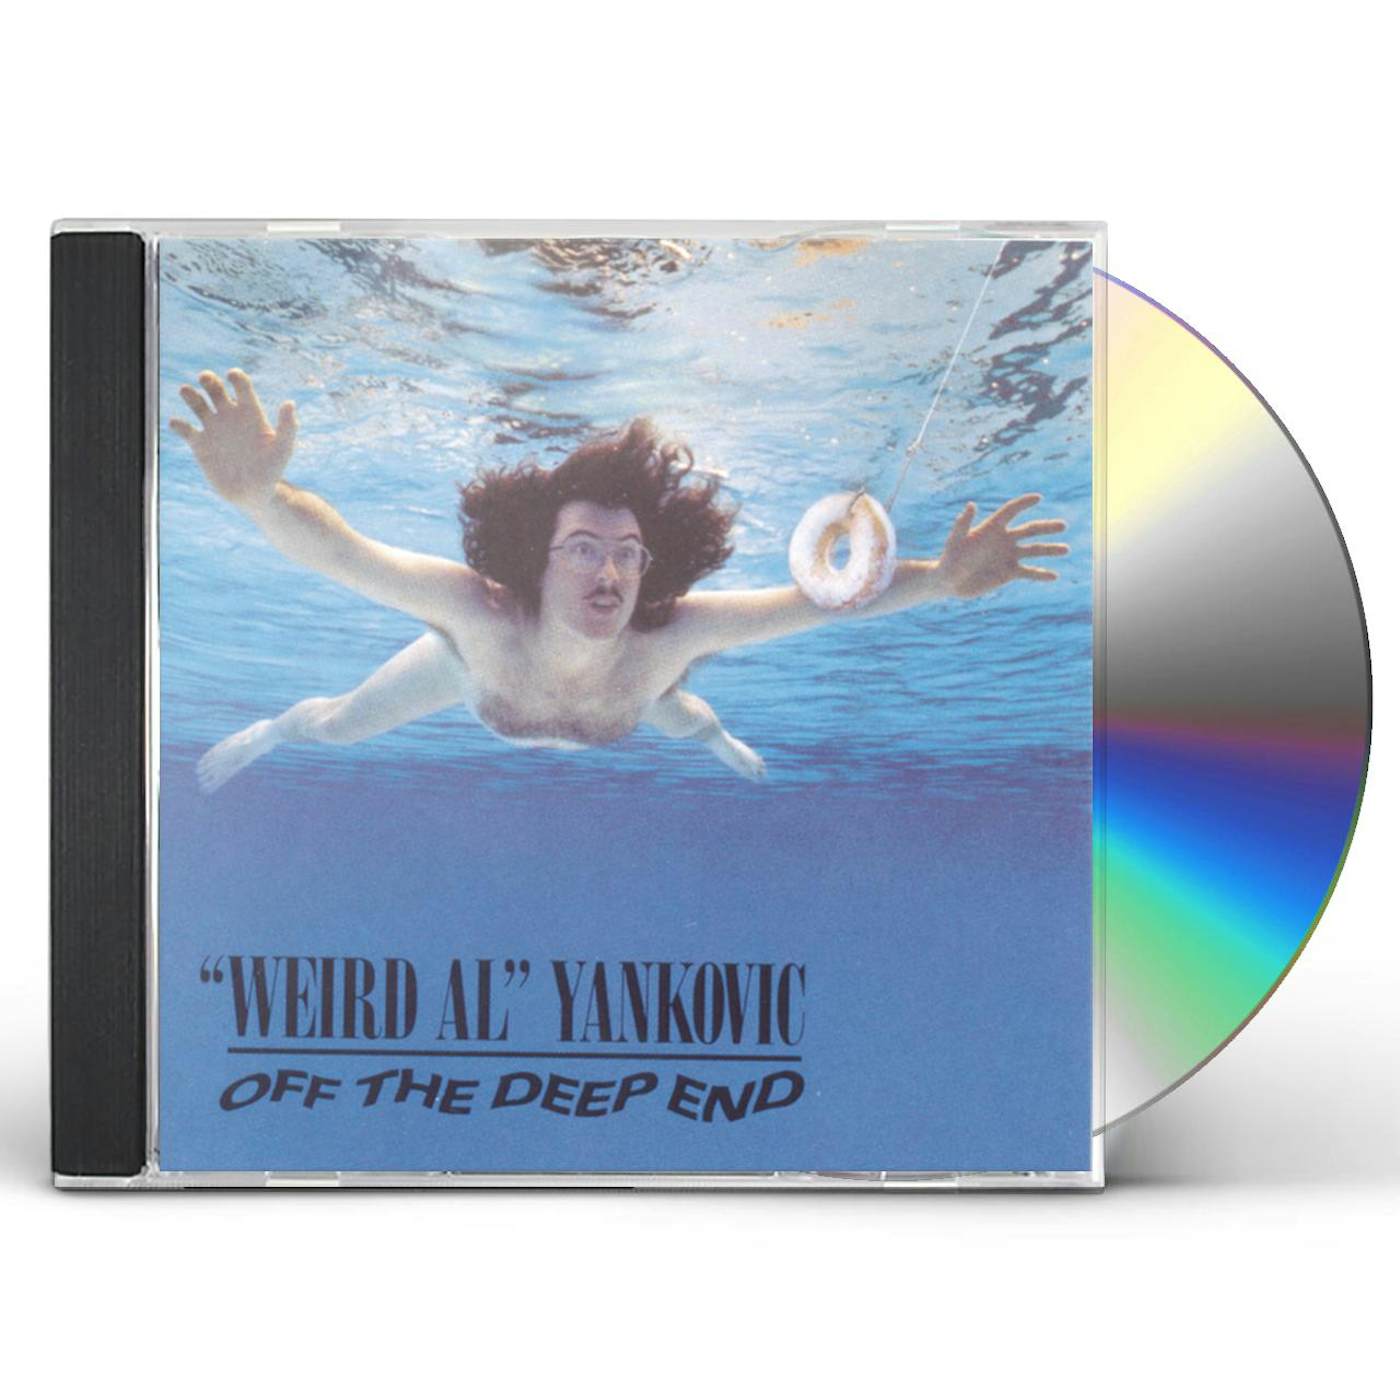 "Weird Al" Yankovic OFF THE DEEP END CD